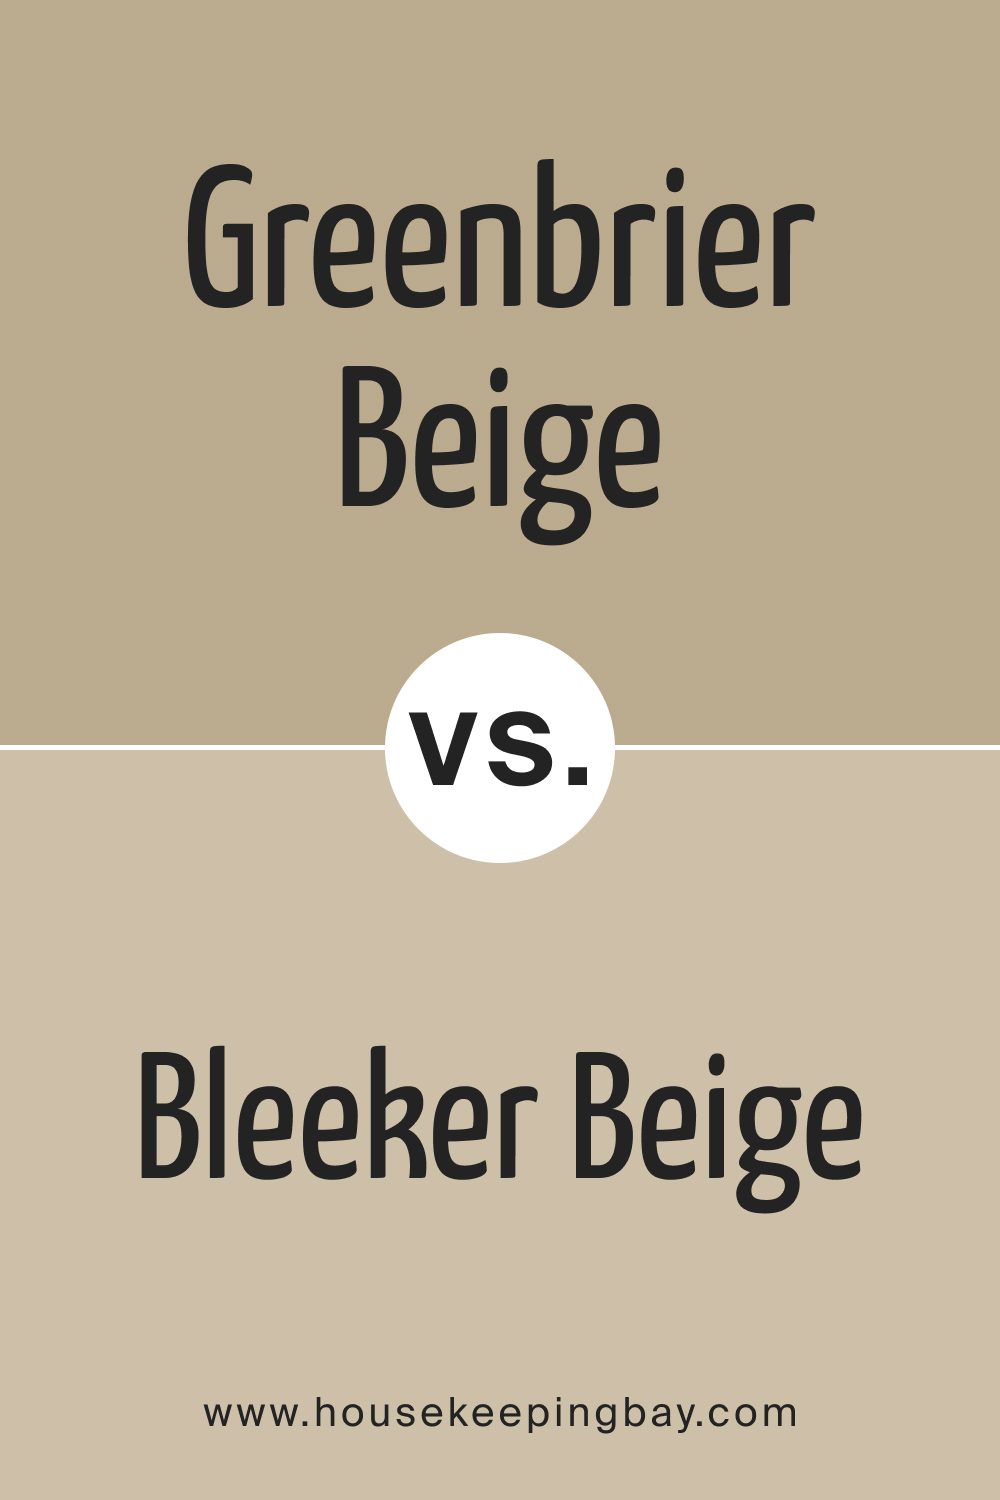 BM Greenbrier Beige HC-79 vs. HC-80 Bleeker Beige